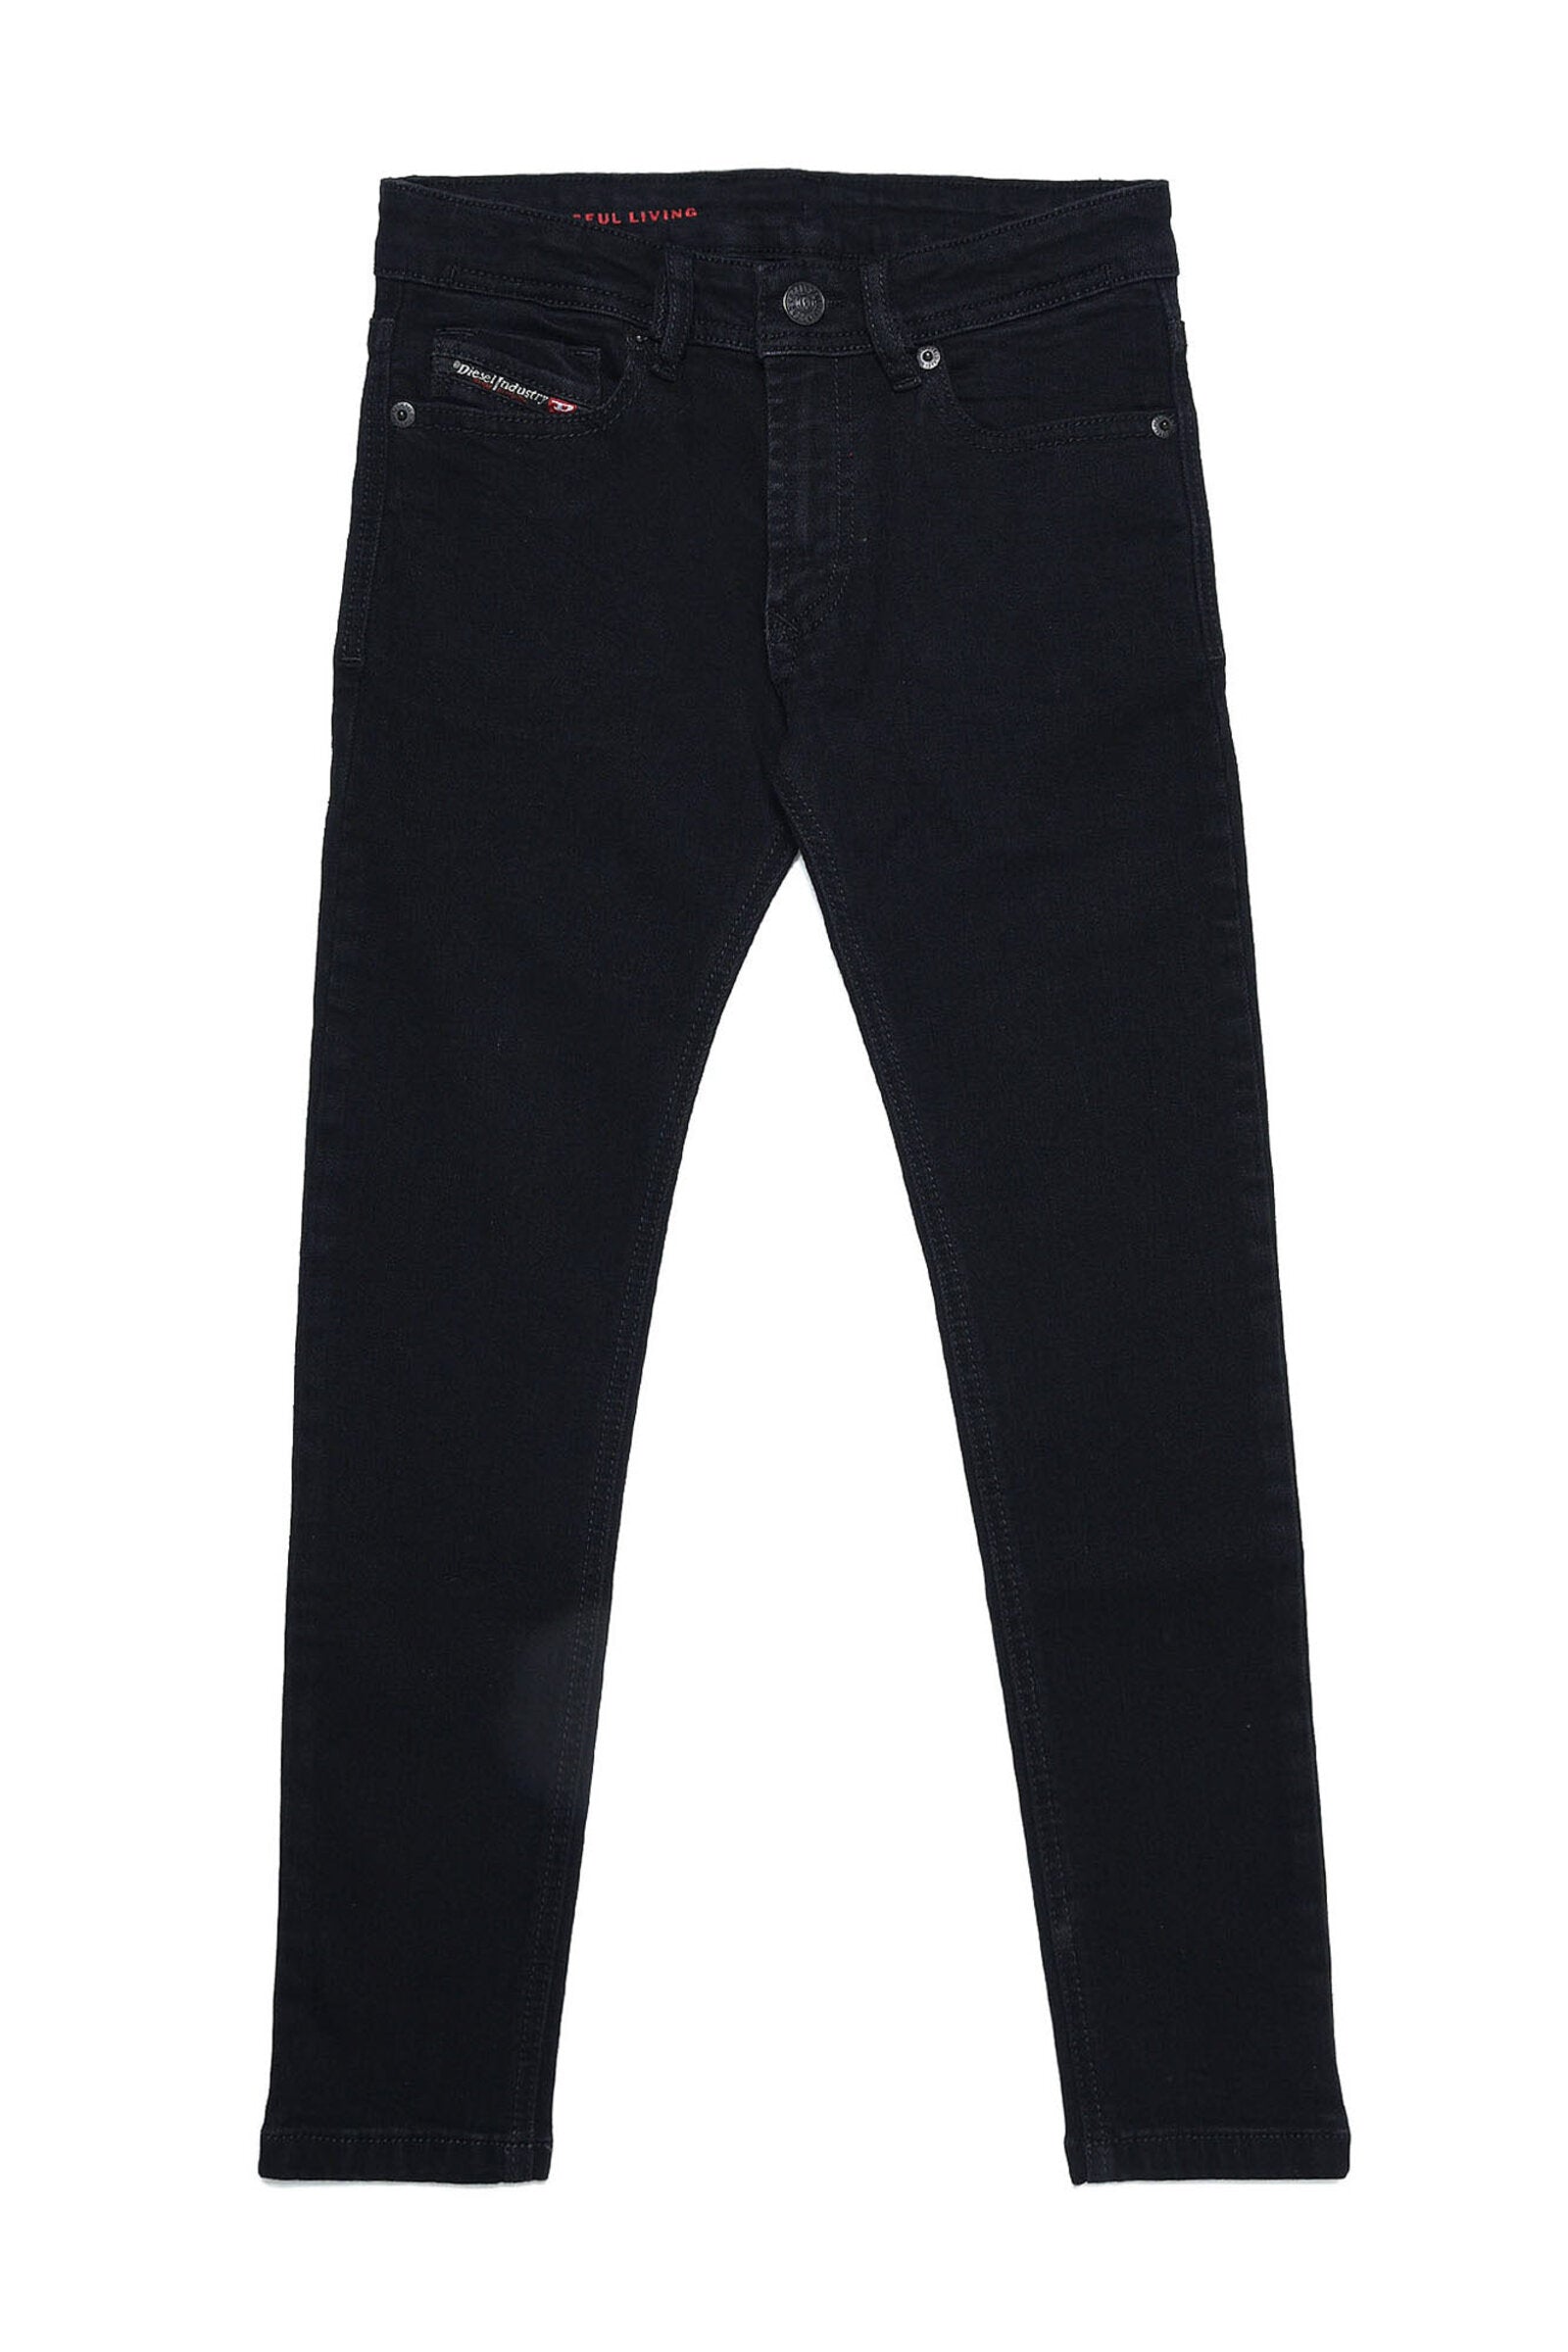 Jeans 1979 Sleenker skinny negros